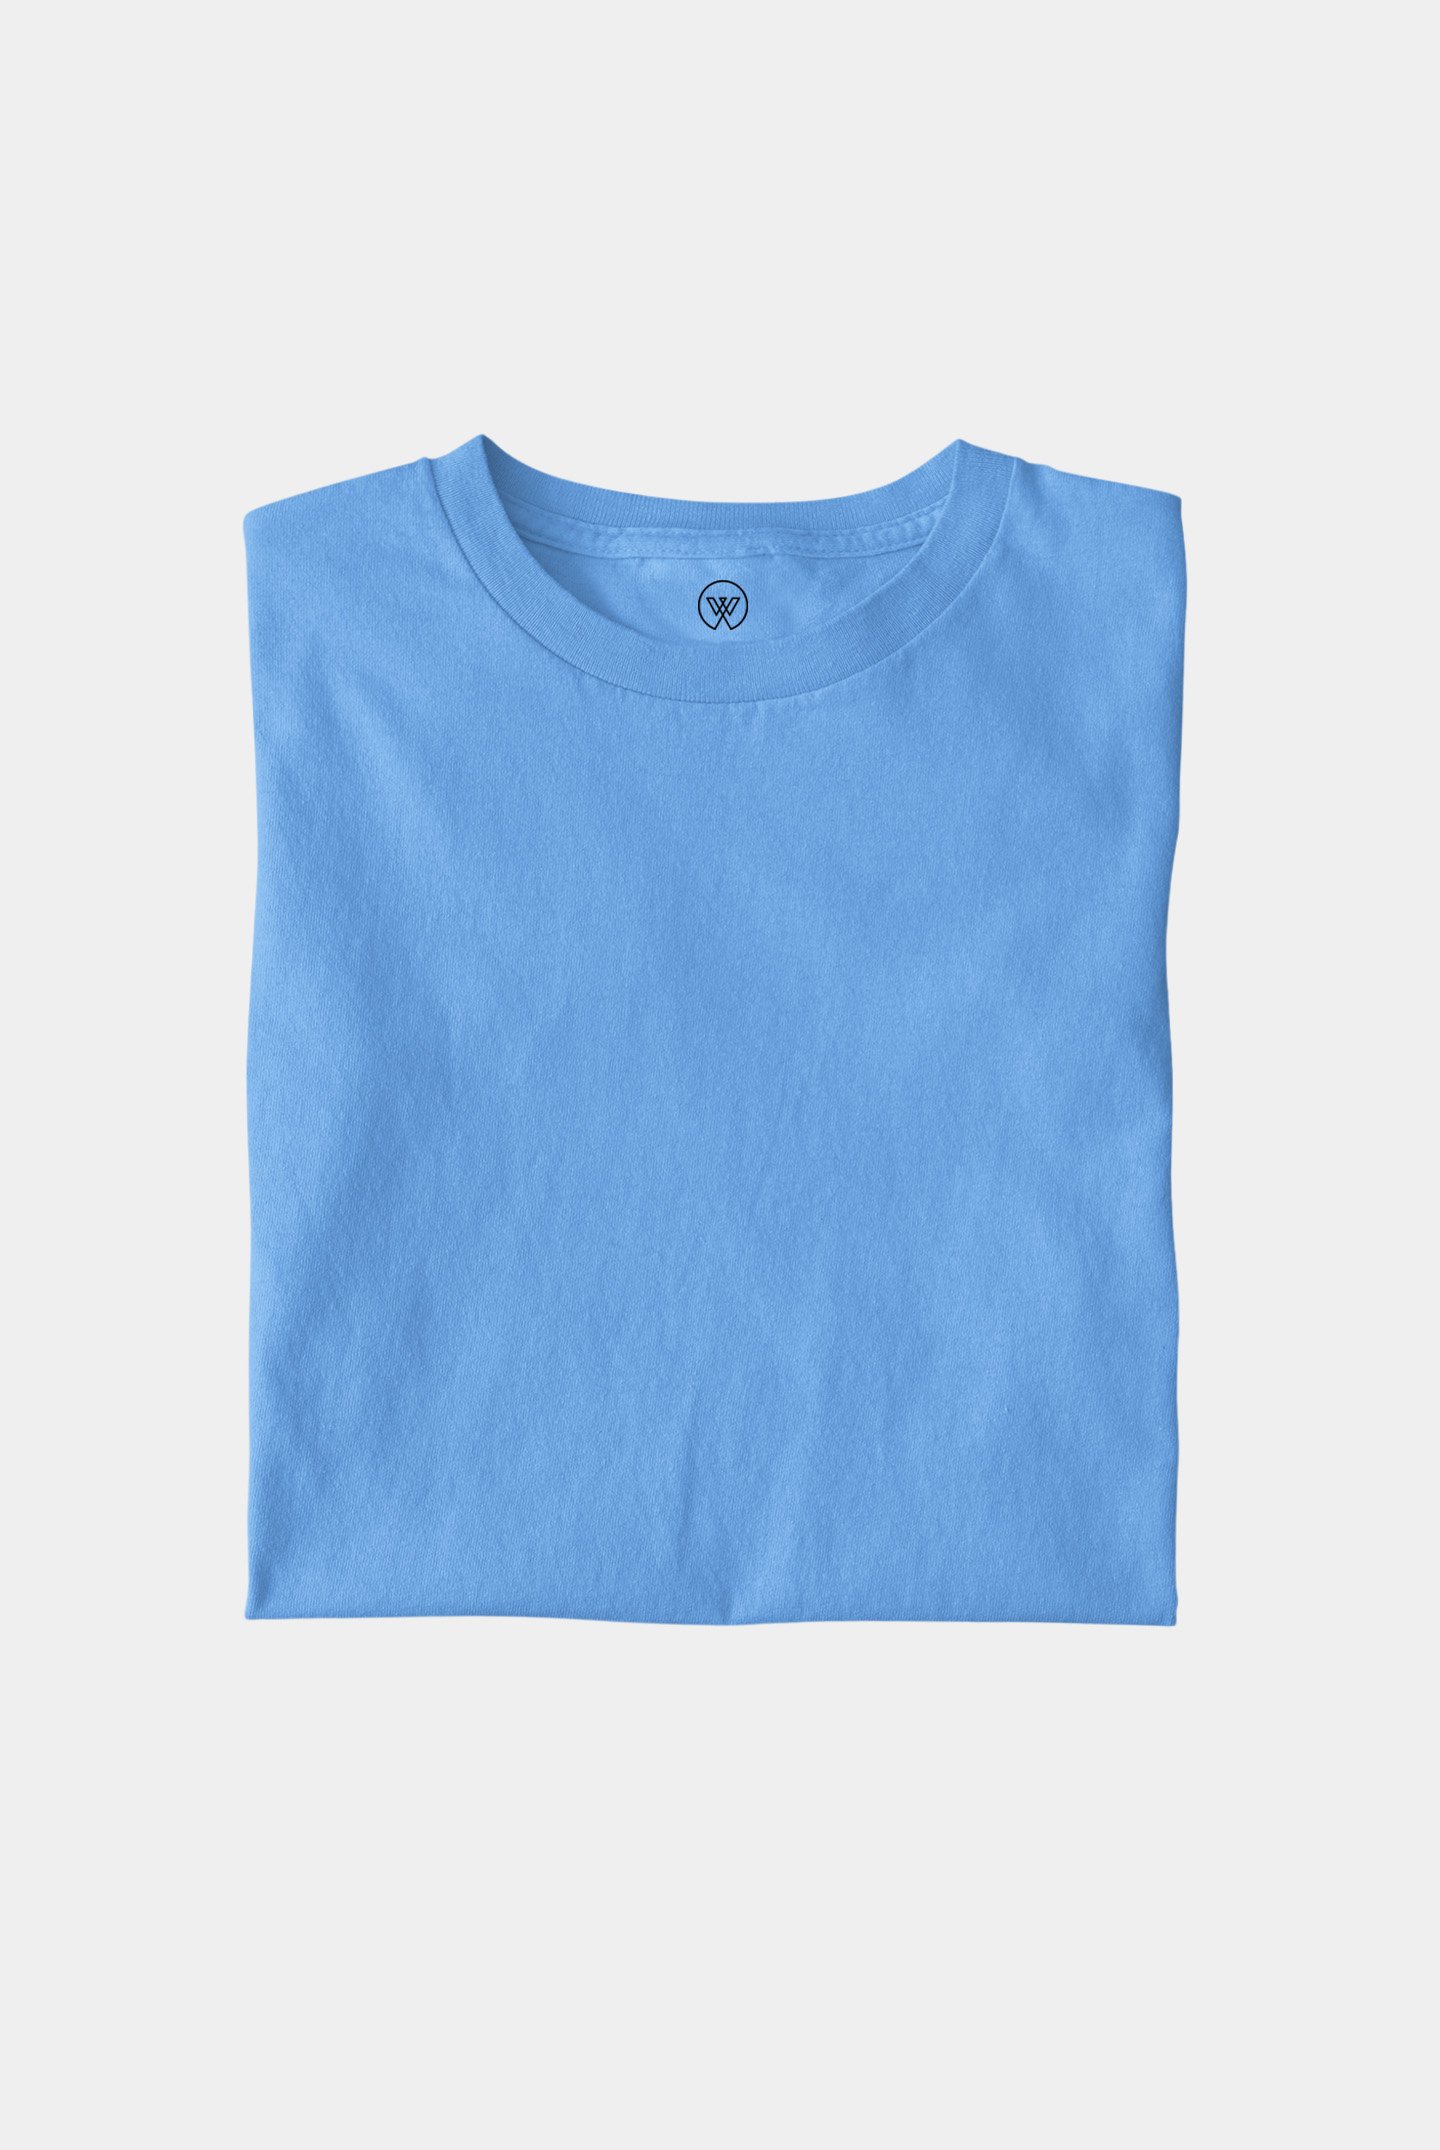 Wayward Wayz Solid T-Shirt Sky Blue-Folded